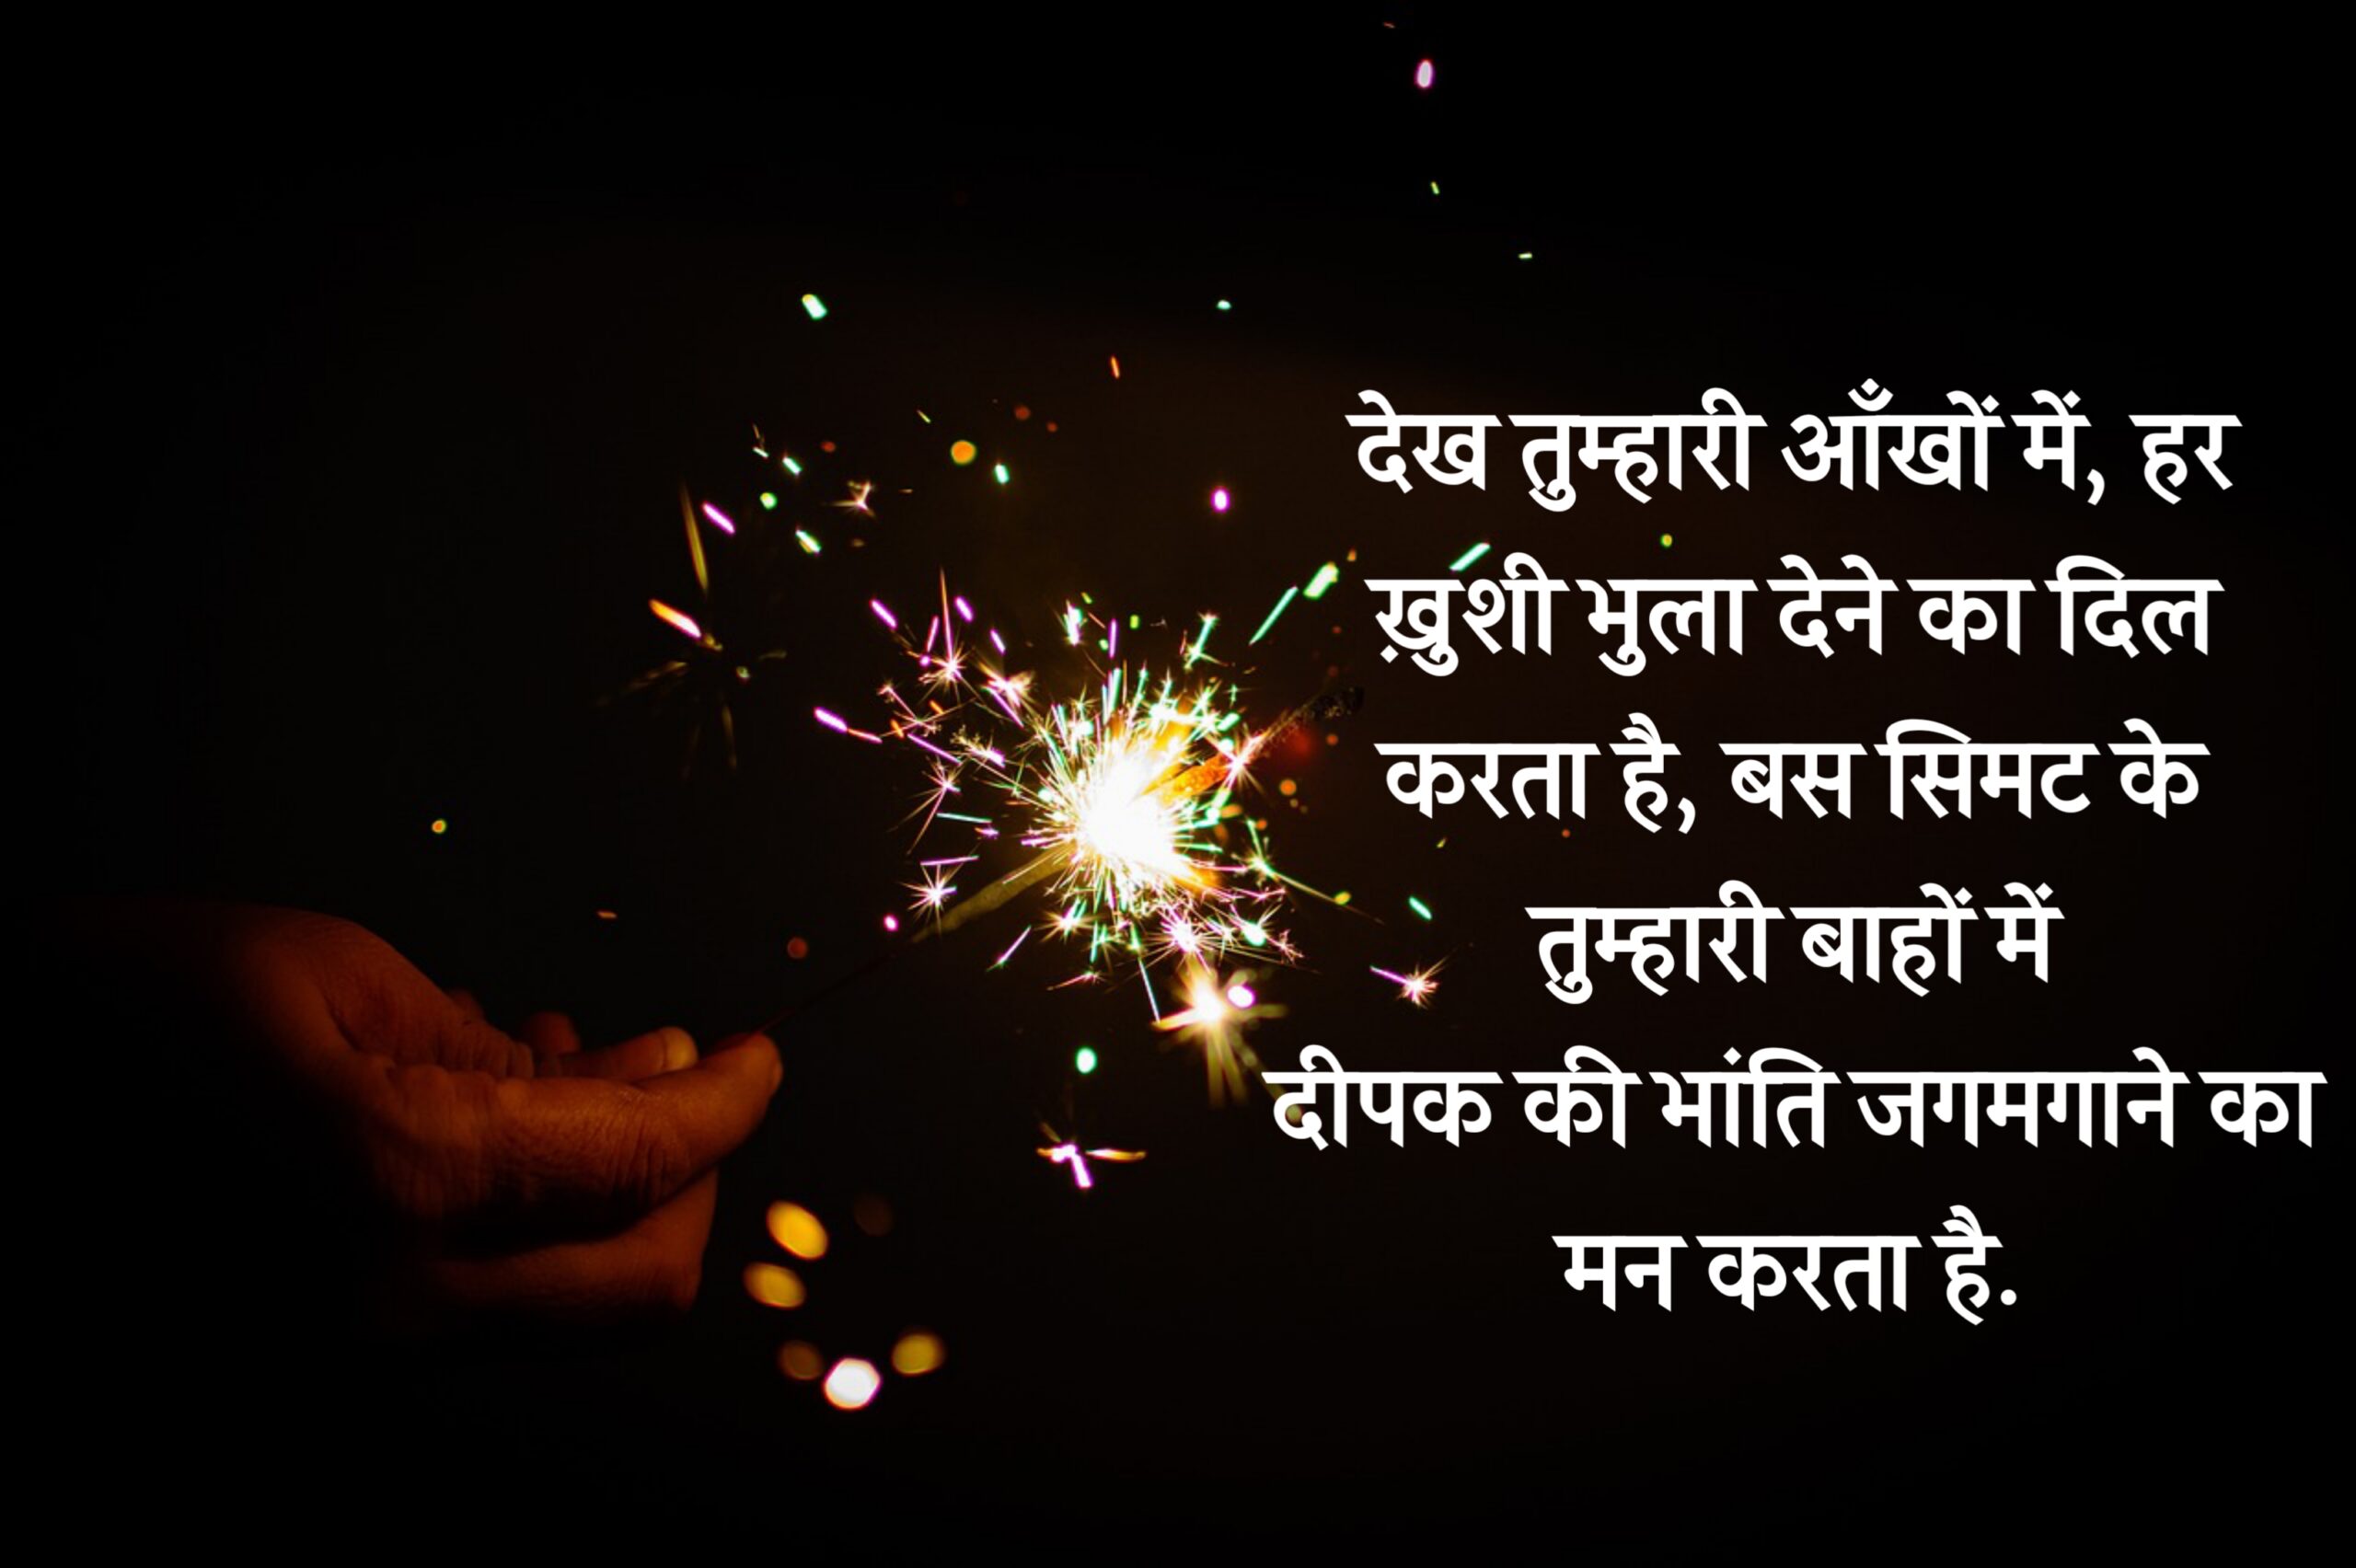 दिवाली शायरी इन हिंदी, Diwali shayari in Hindi, Diwali wishes in Hindi, Diwali status in Hindi,Diwali shayari,happy diwali shayari,diwali shayari hindi,funny diwali shayari